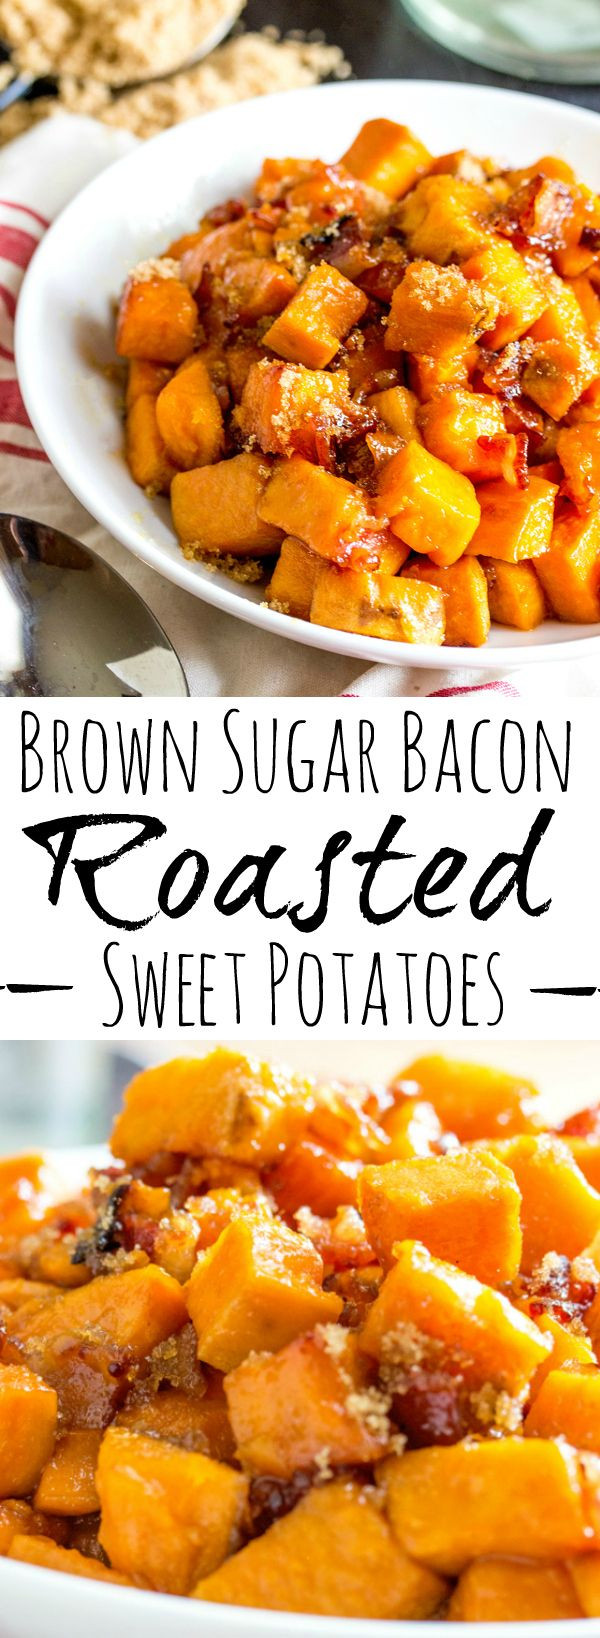 Sweet Potato Recipe For Thanksgiving
 Brown Sugar Bacon Roasted Sweet Potatoes